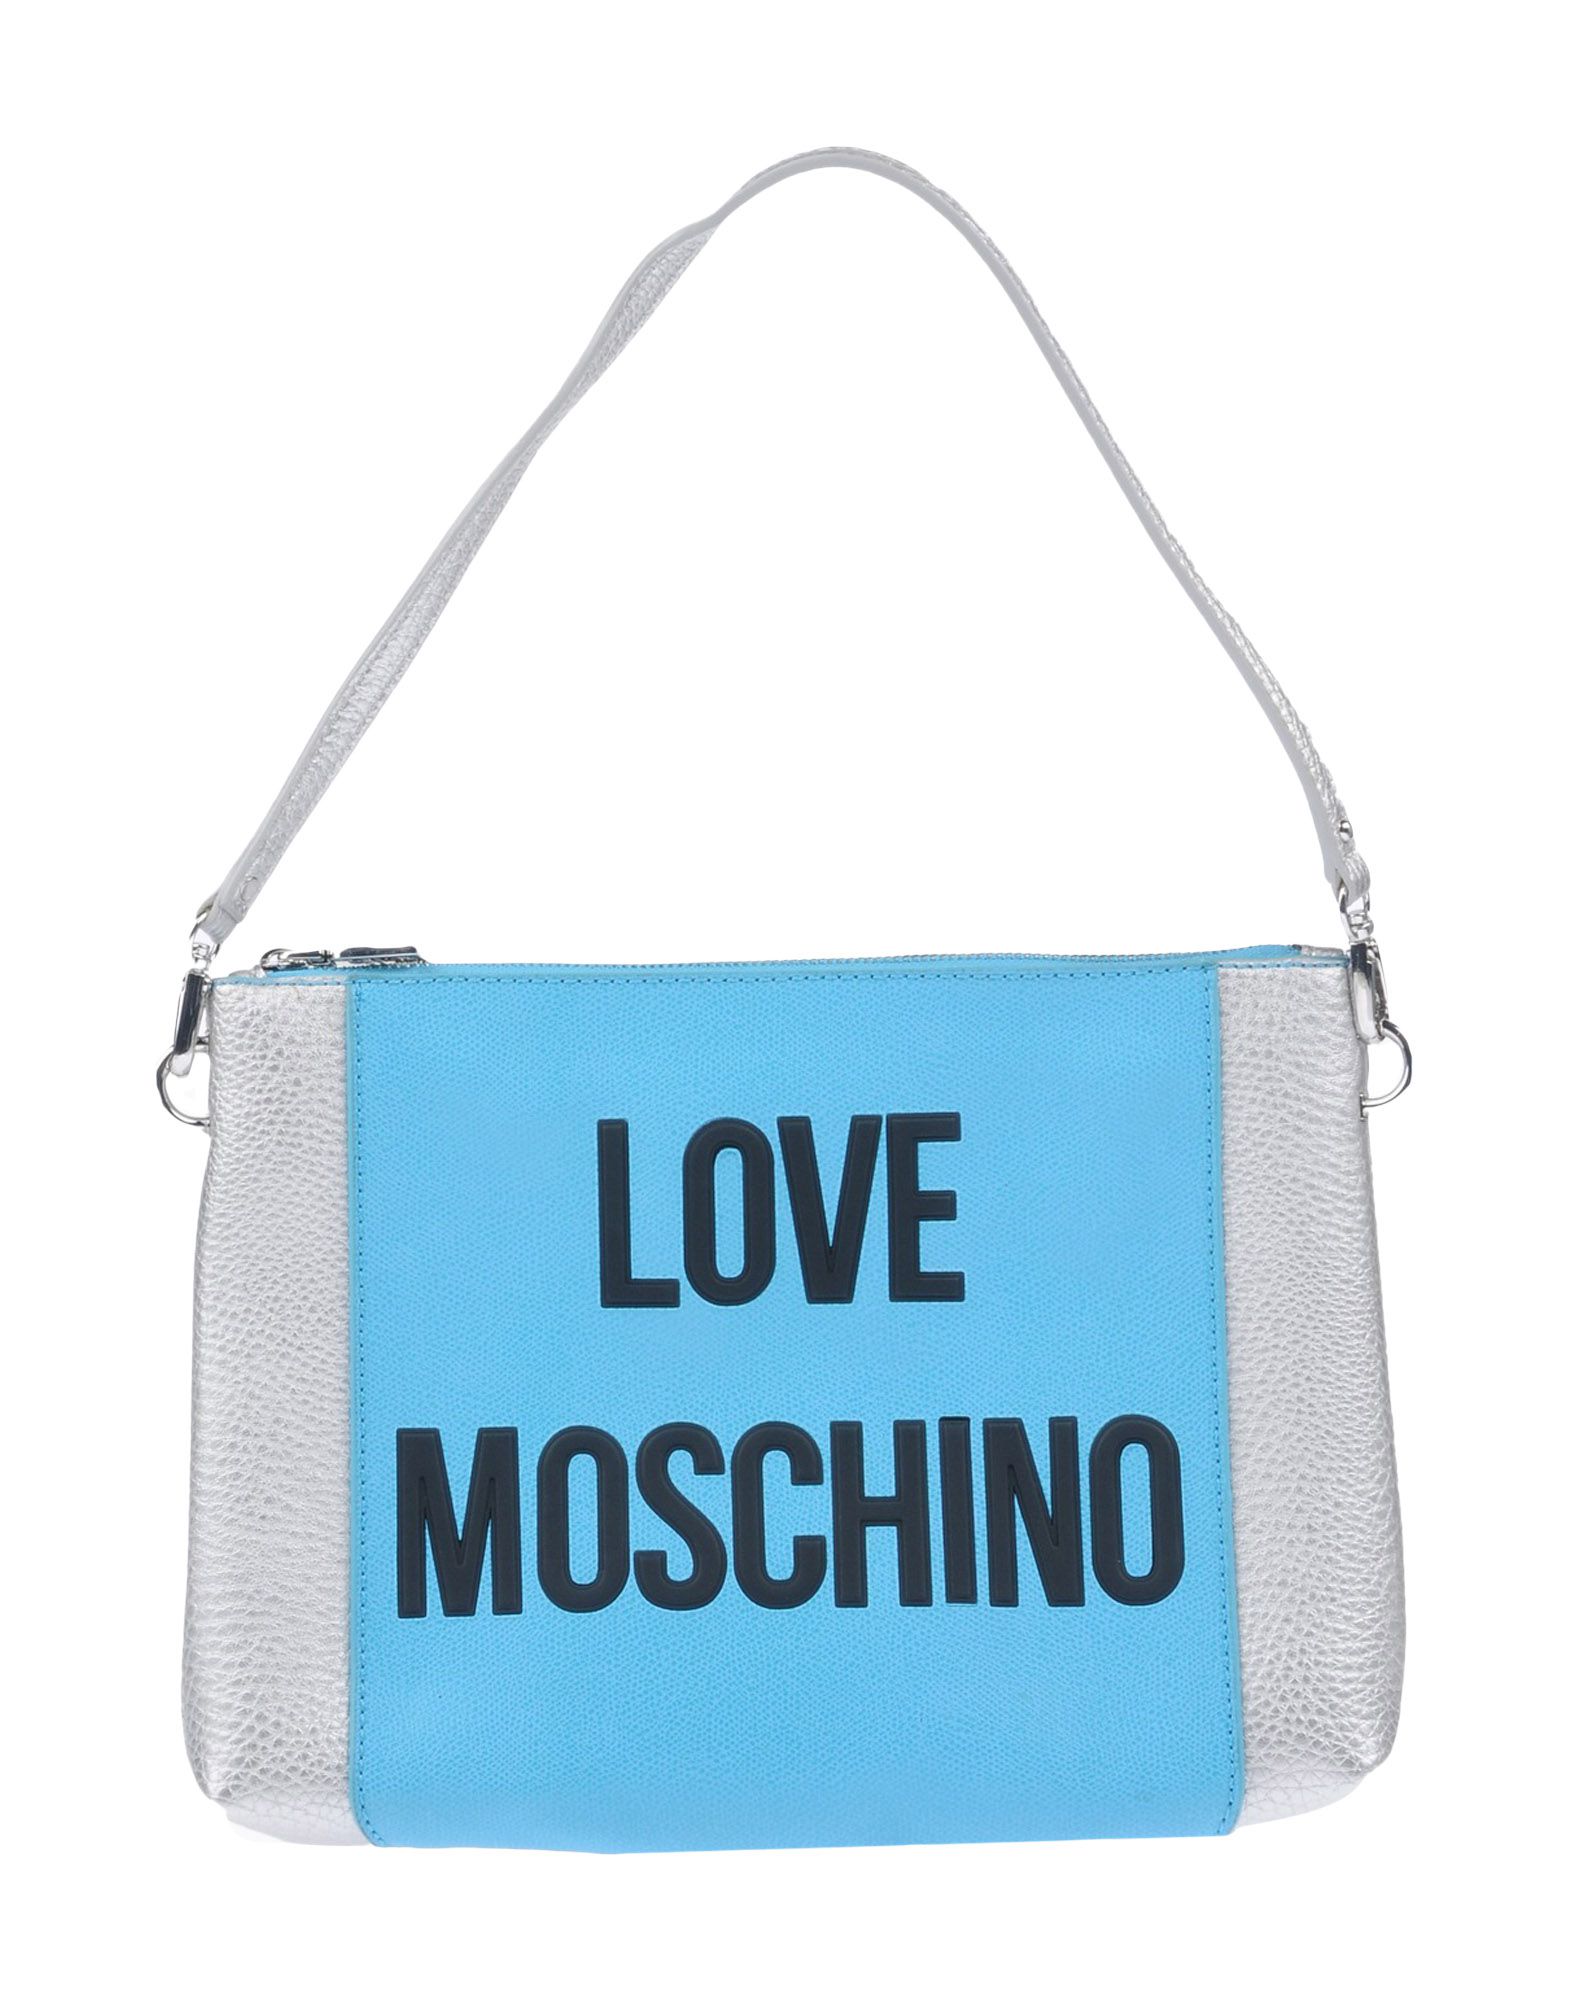 LOVE MOSCHINO Handbag,45402657MX 1